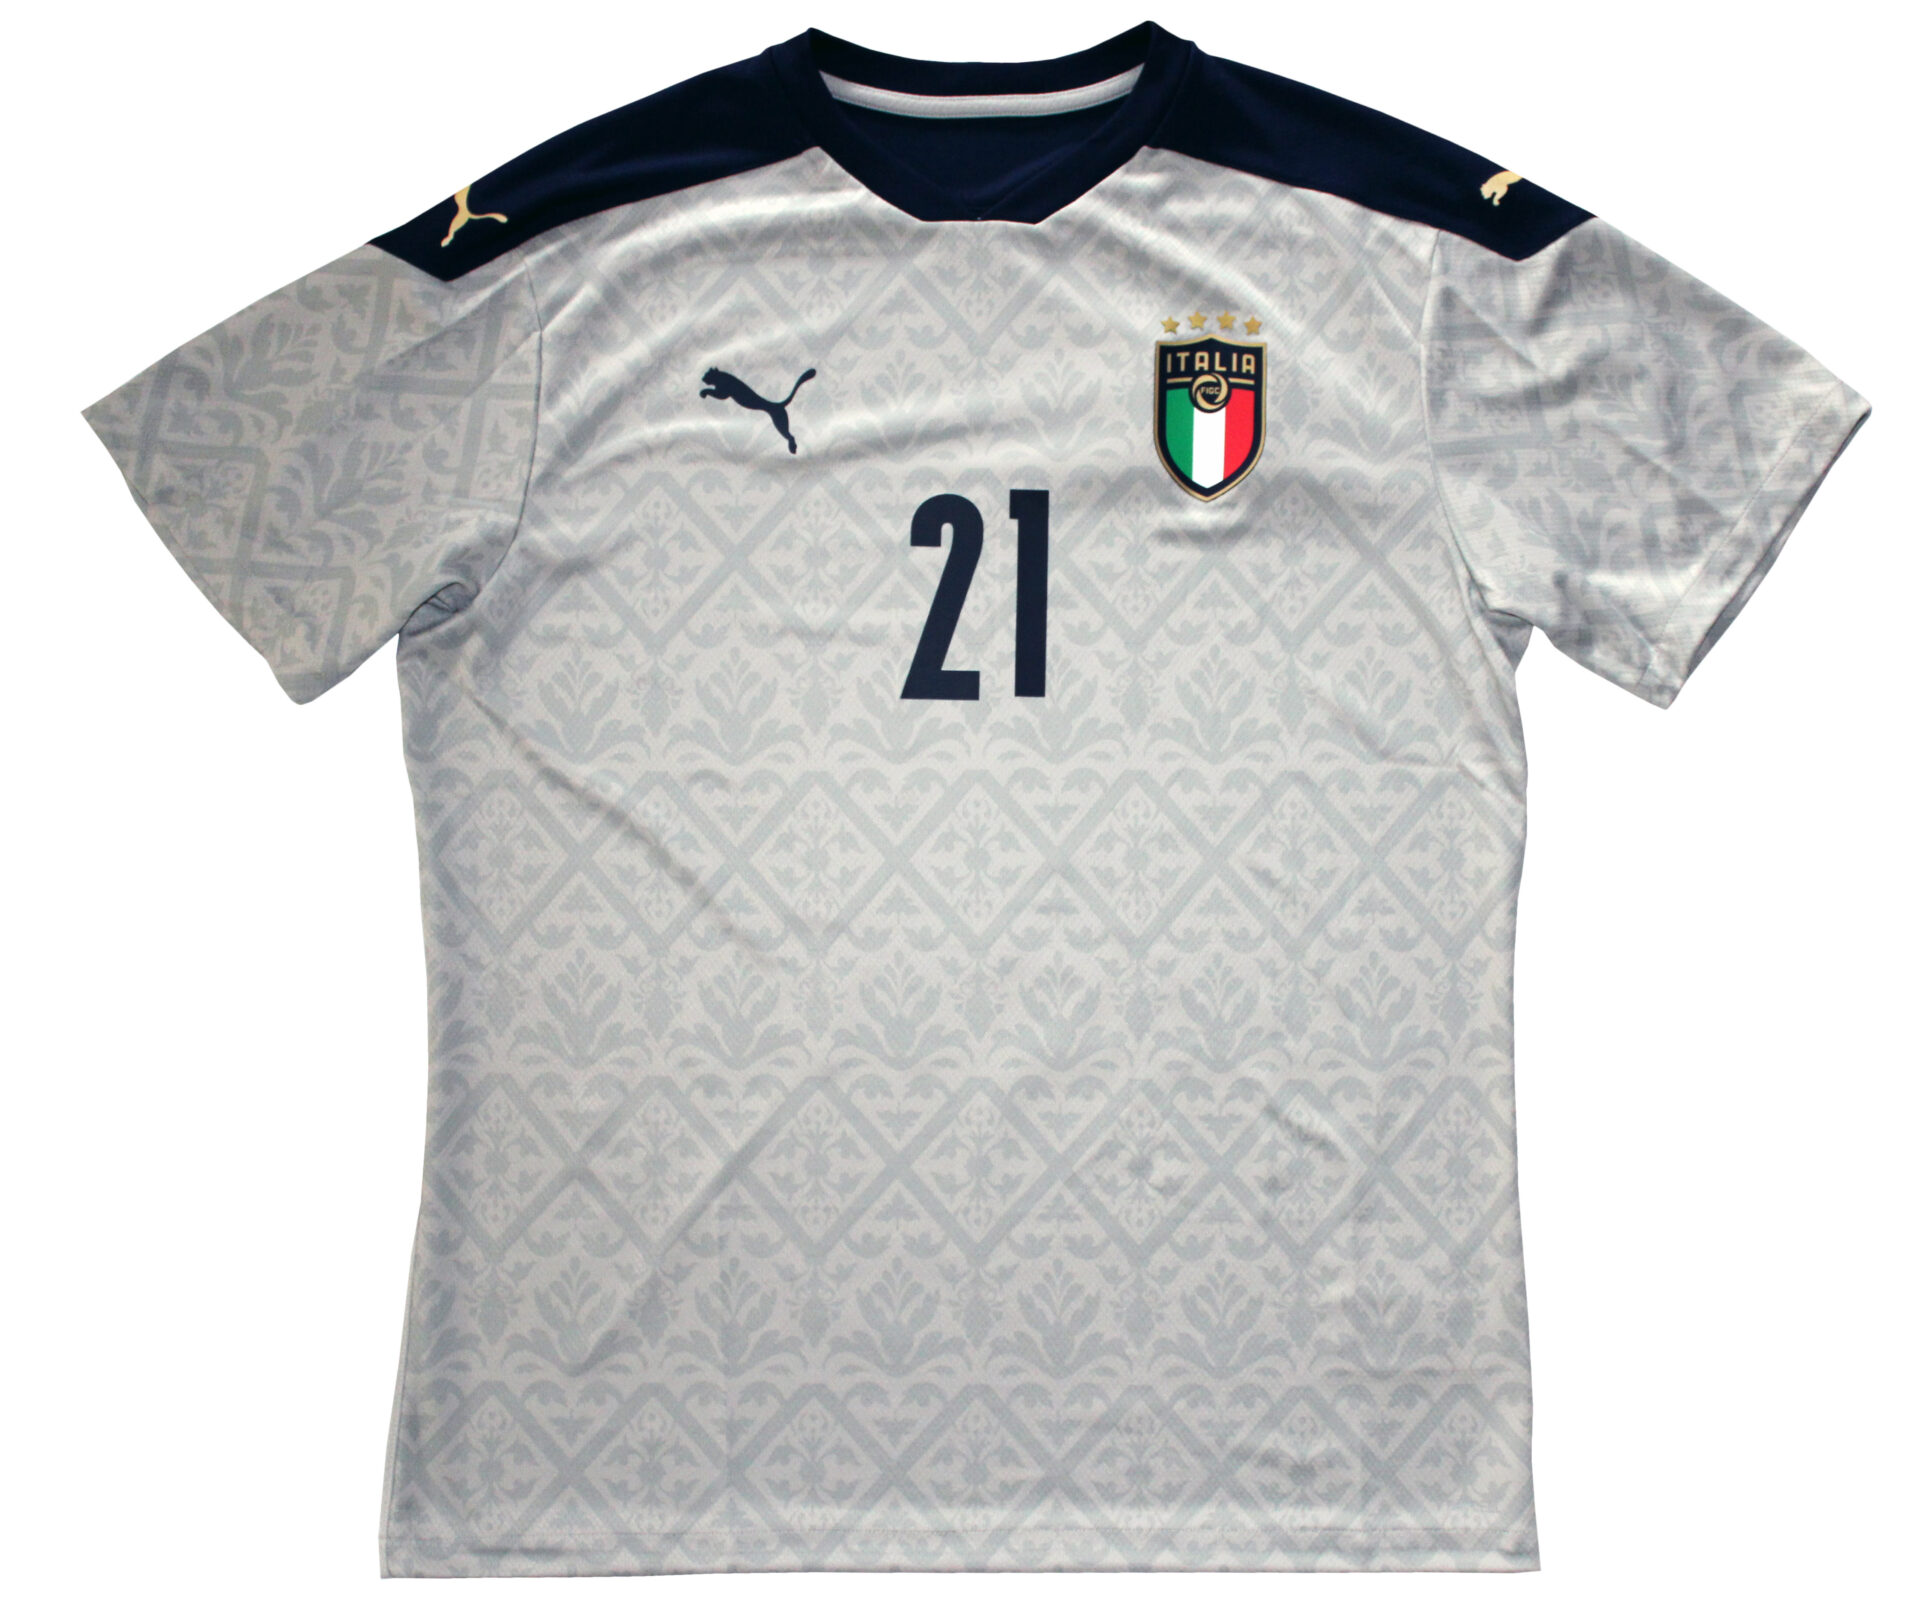 Gigi Donnarumma Signed Official AC Milan Goalkeeper Jersey & Photo